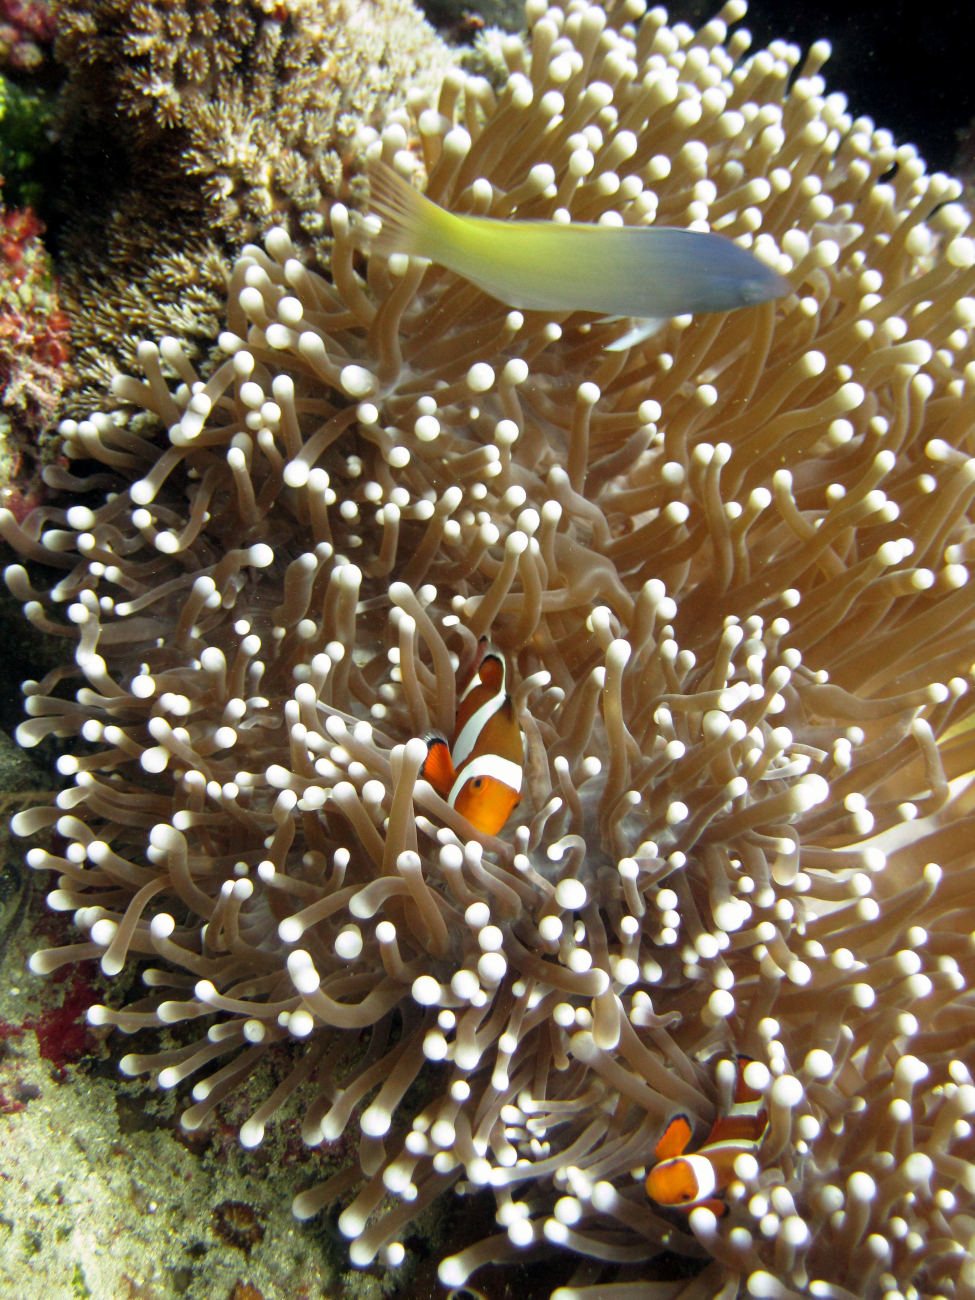 Clown anemonefish (Amphiprion ocellaris)